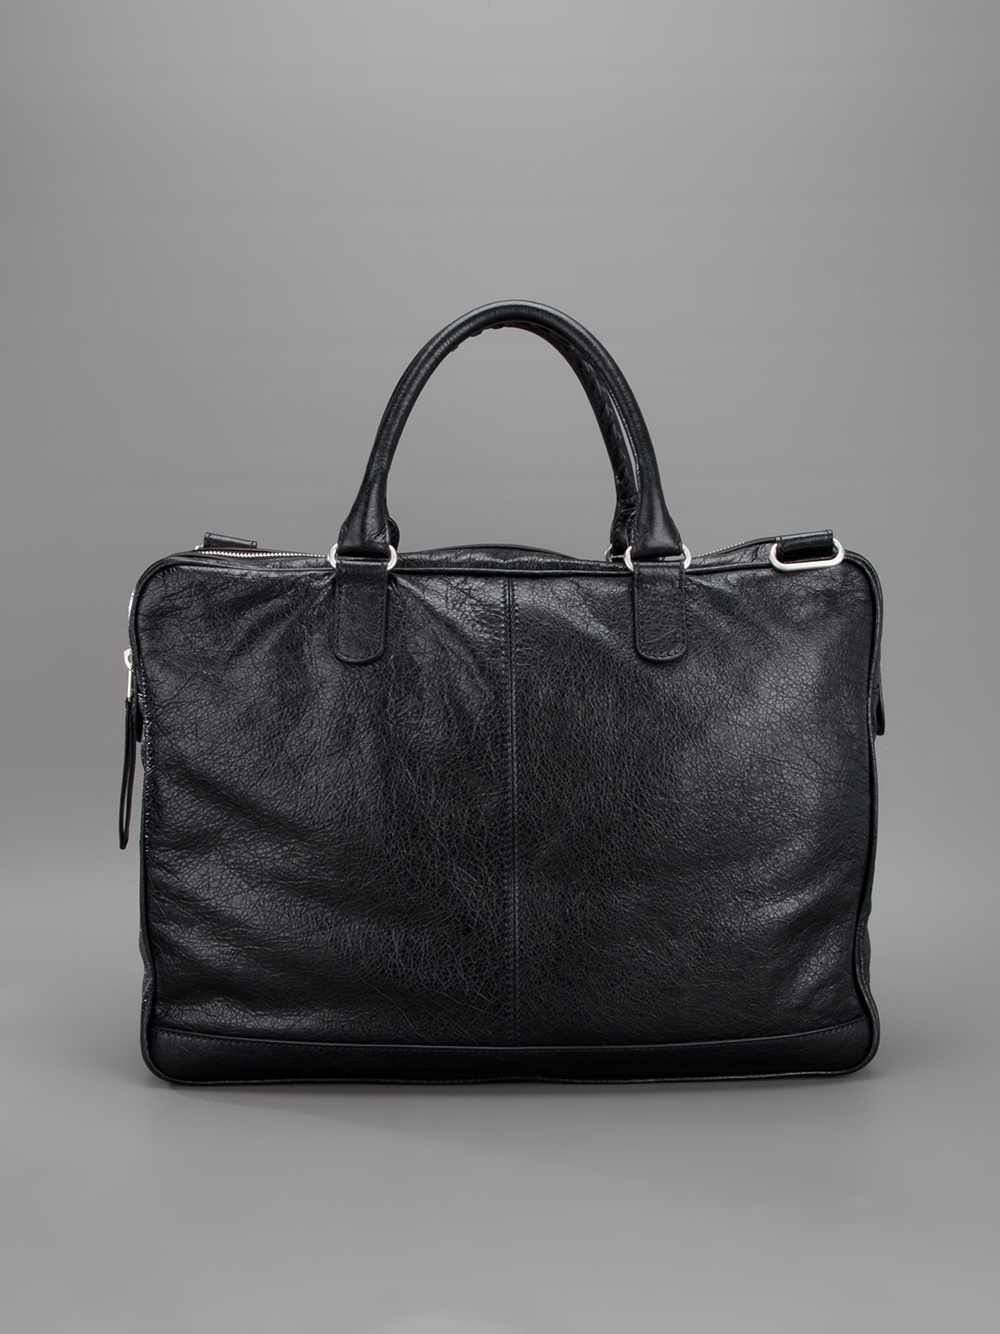 Lyst - Balenciaga Studded Zip Briefcase in Black